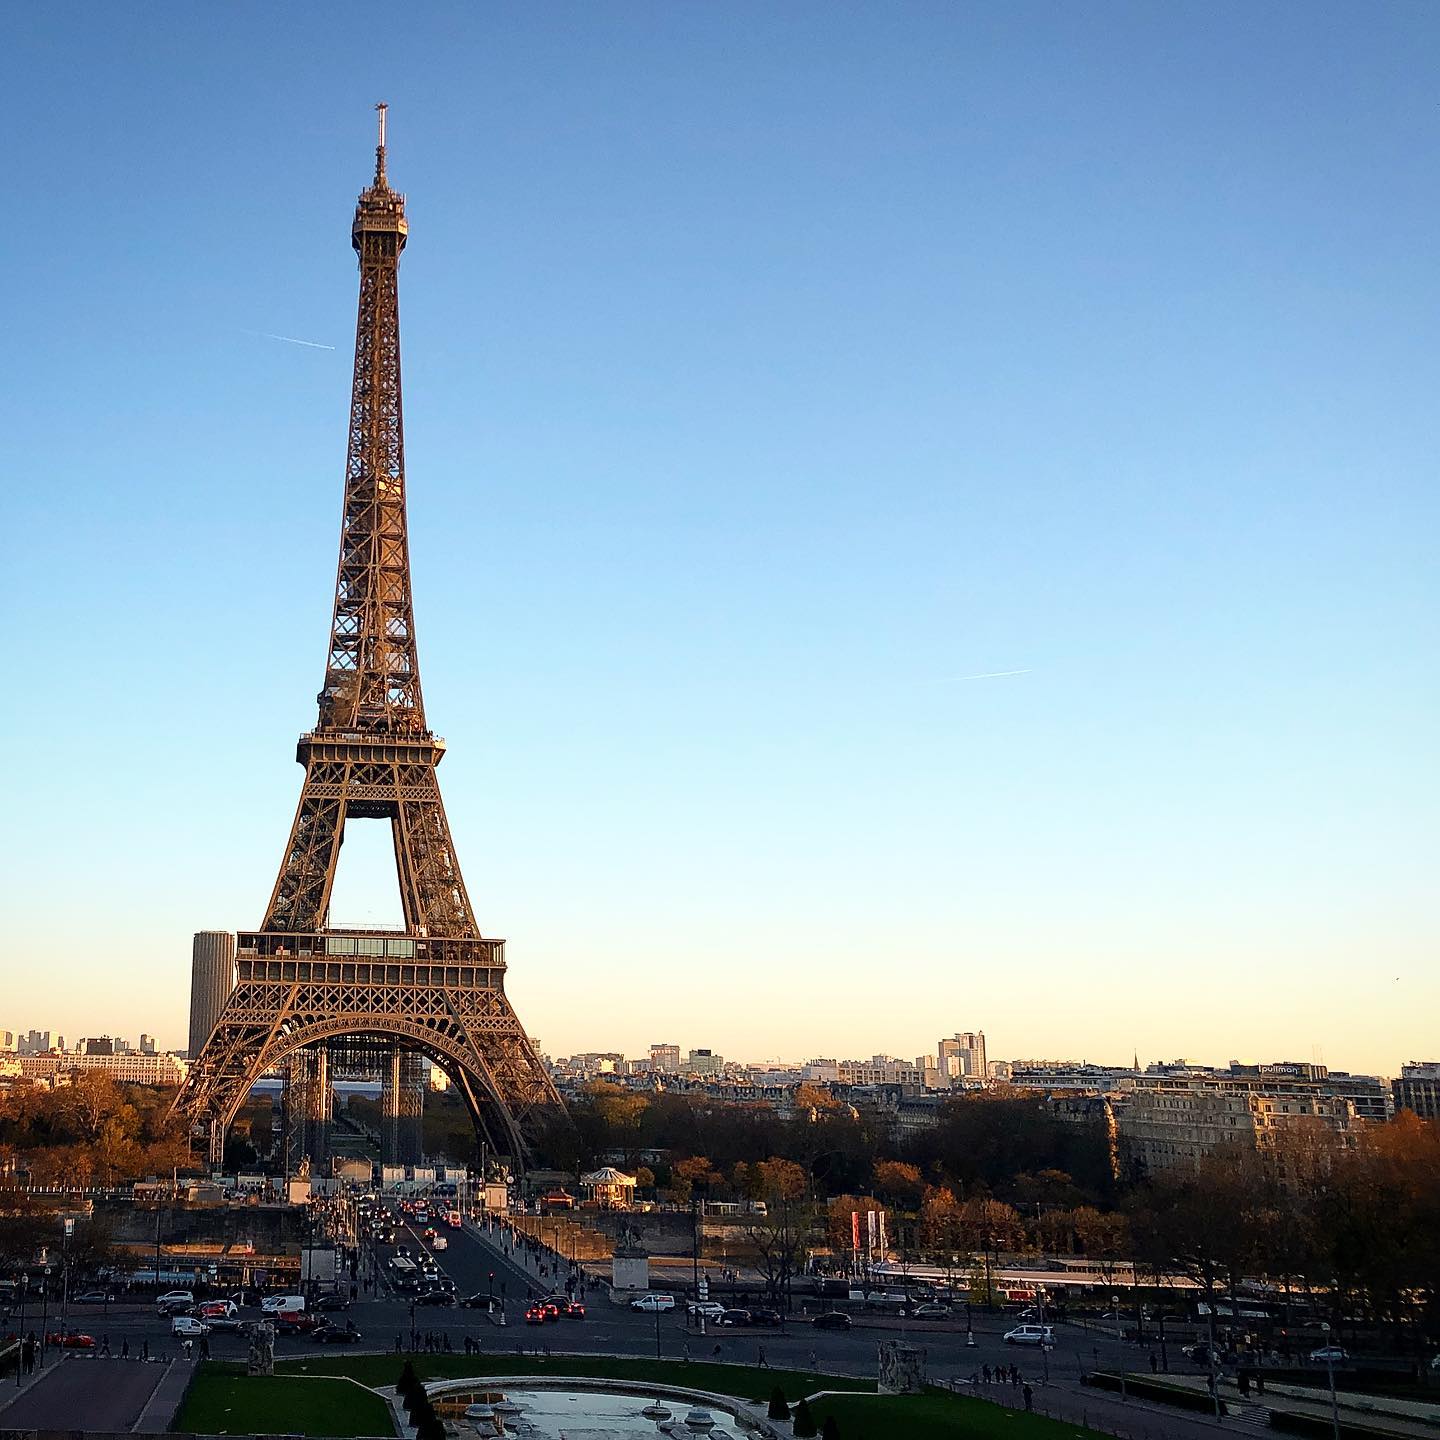 Je fais mon #touriste.

#Paris #TourEiffel #EiffelTower #Eiffel #France